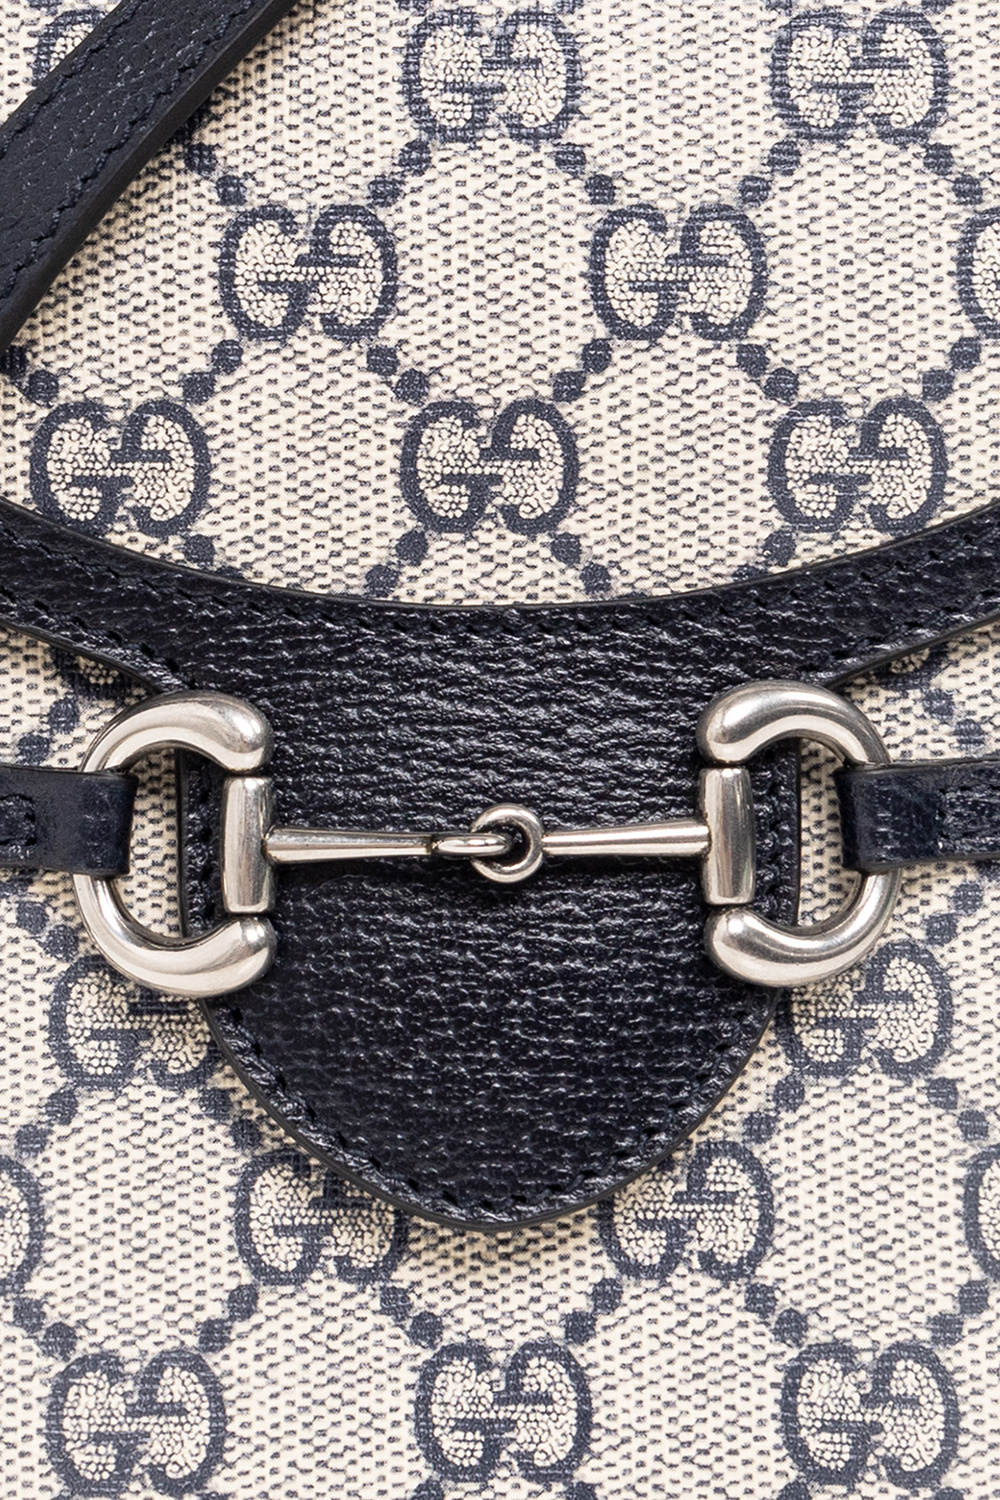 Gucci Horsebit Large Guccissima Leather Hobo Bag